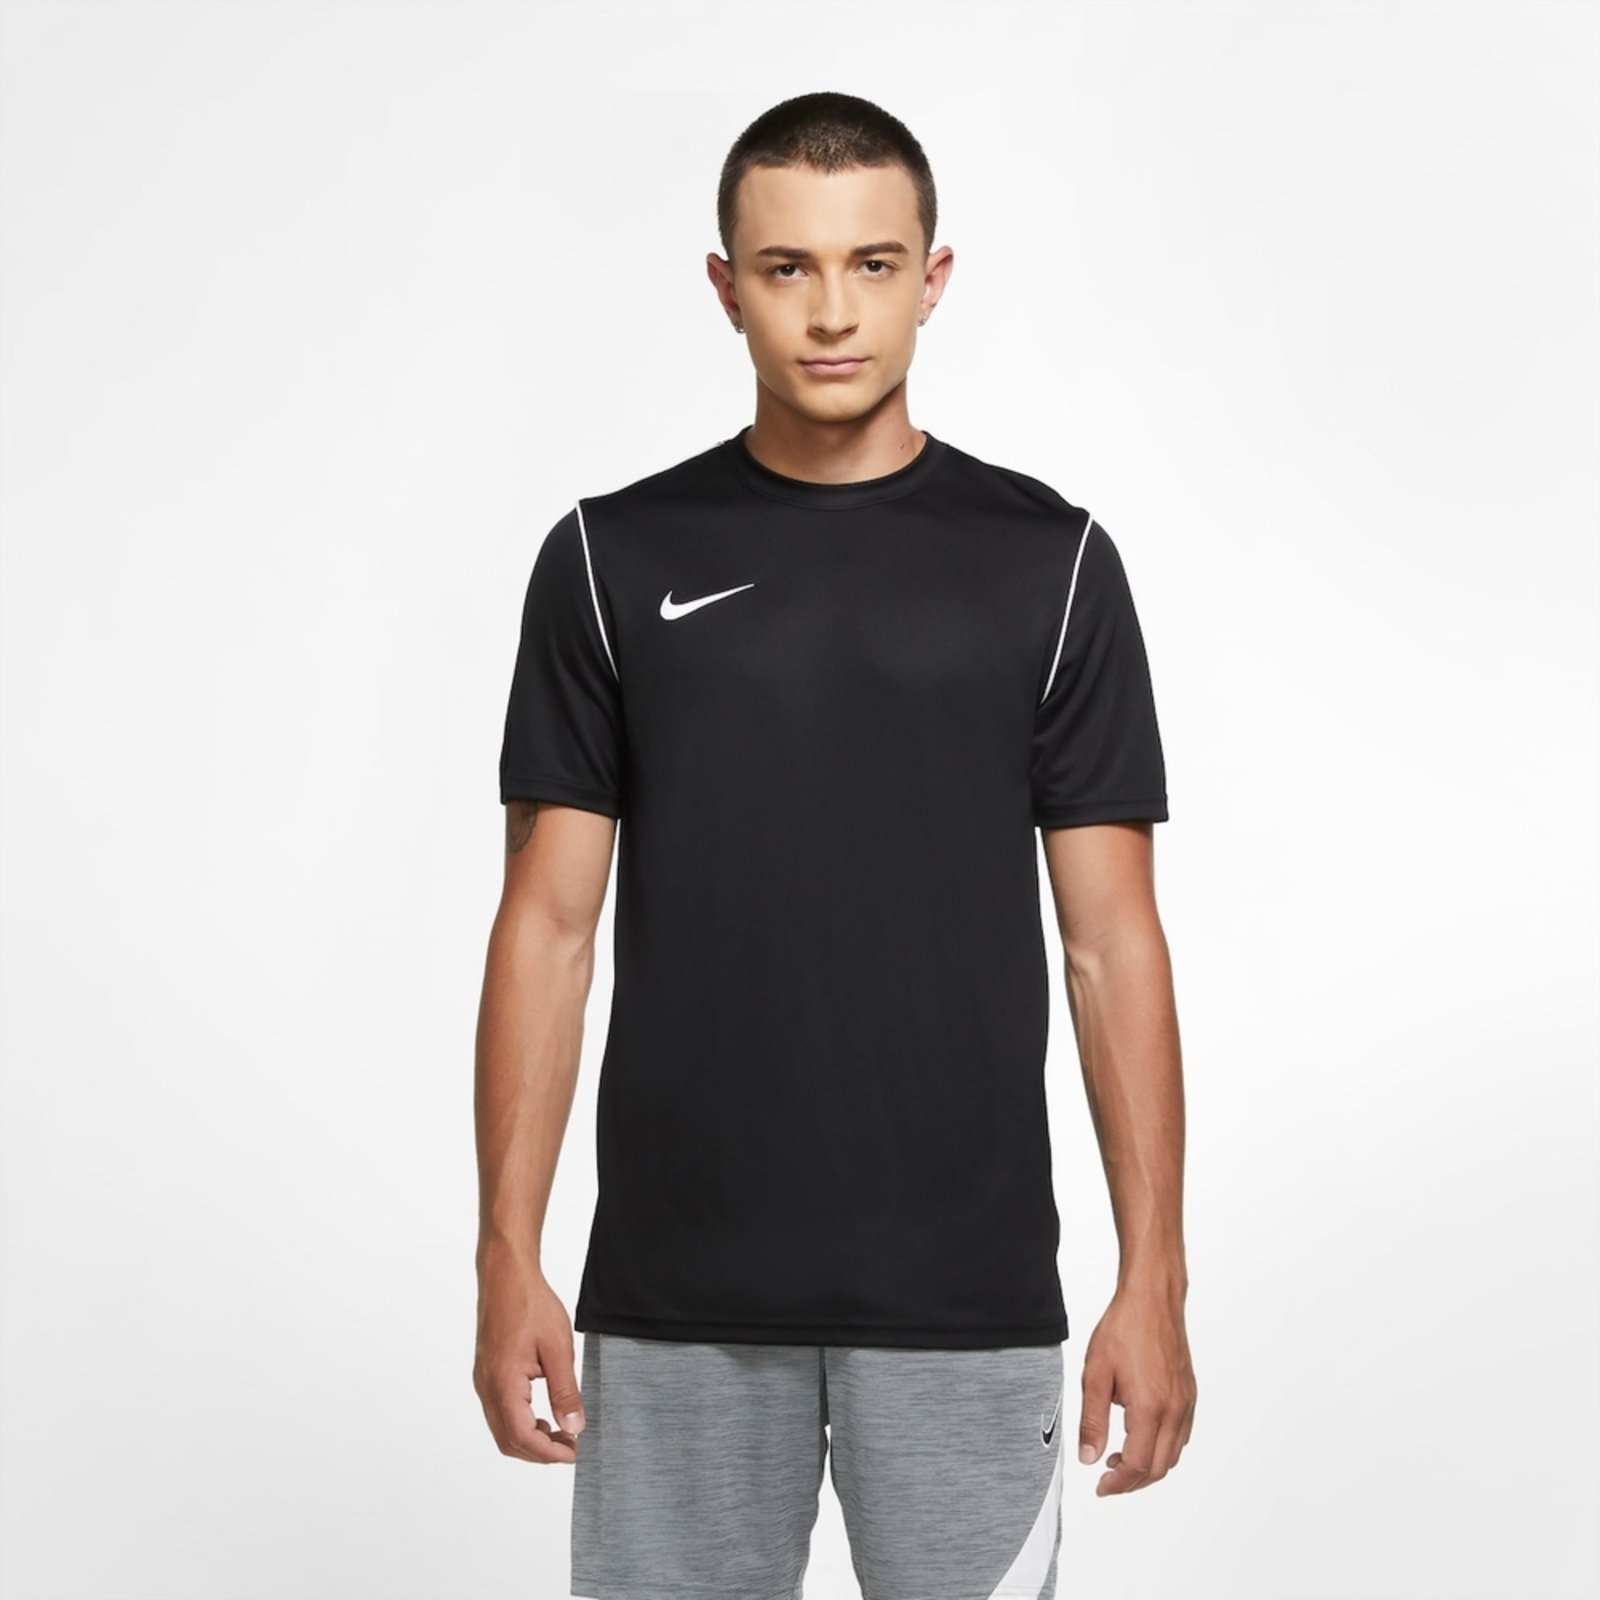 té Discurso semanal Camisa Nike Dri-FIT Masculina - Compre Agora | Kanui Brasil